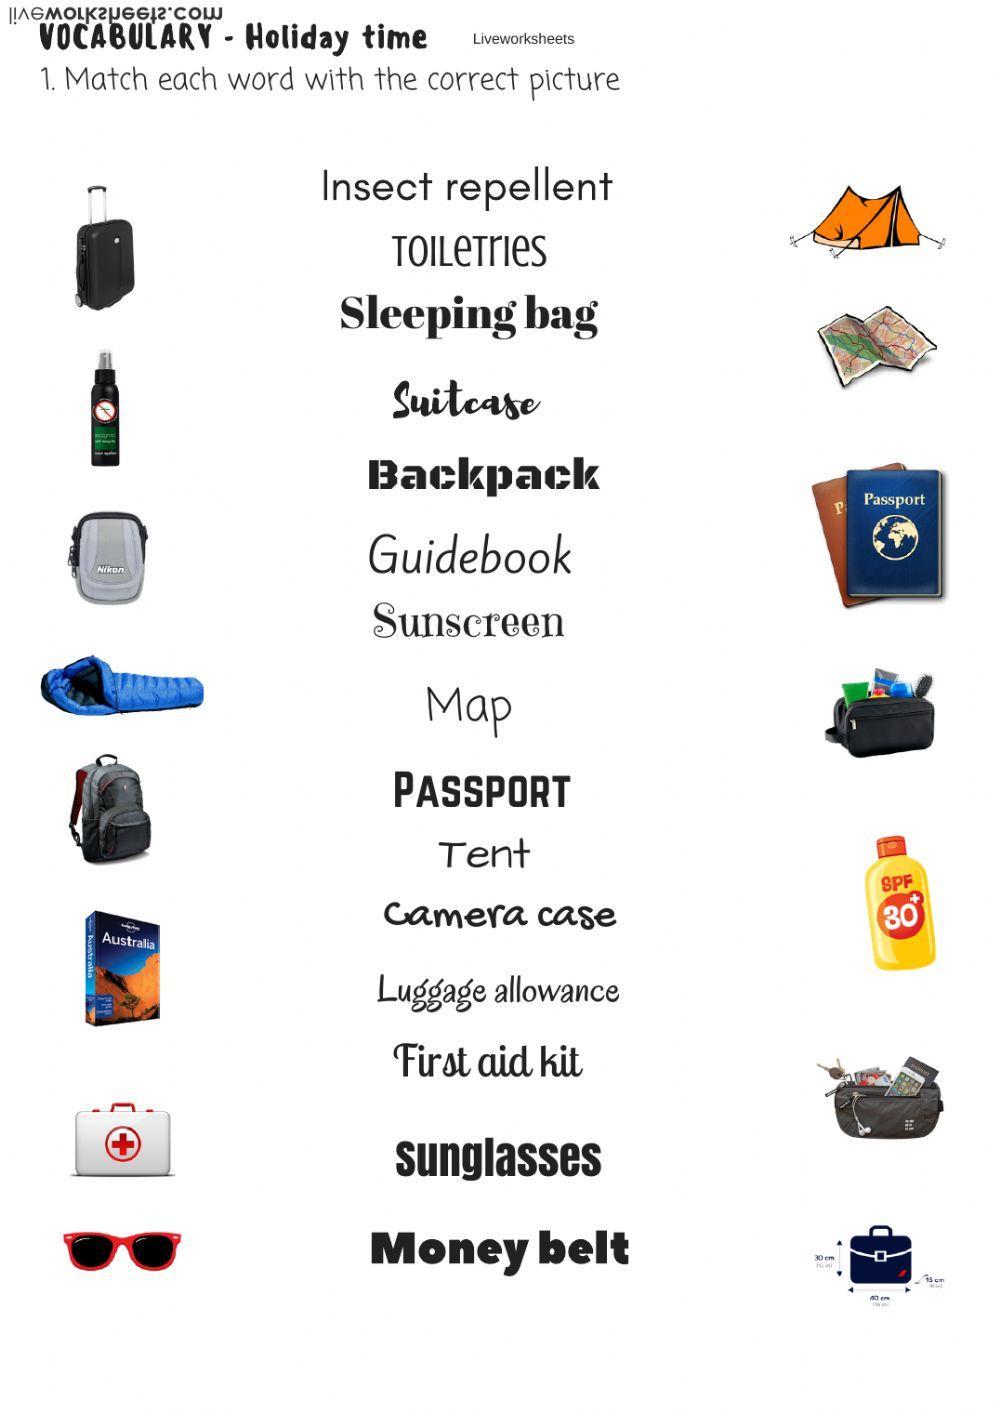 Vocabulary Travel items